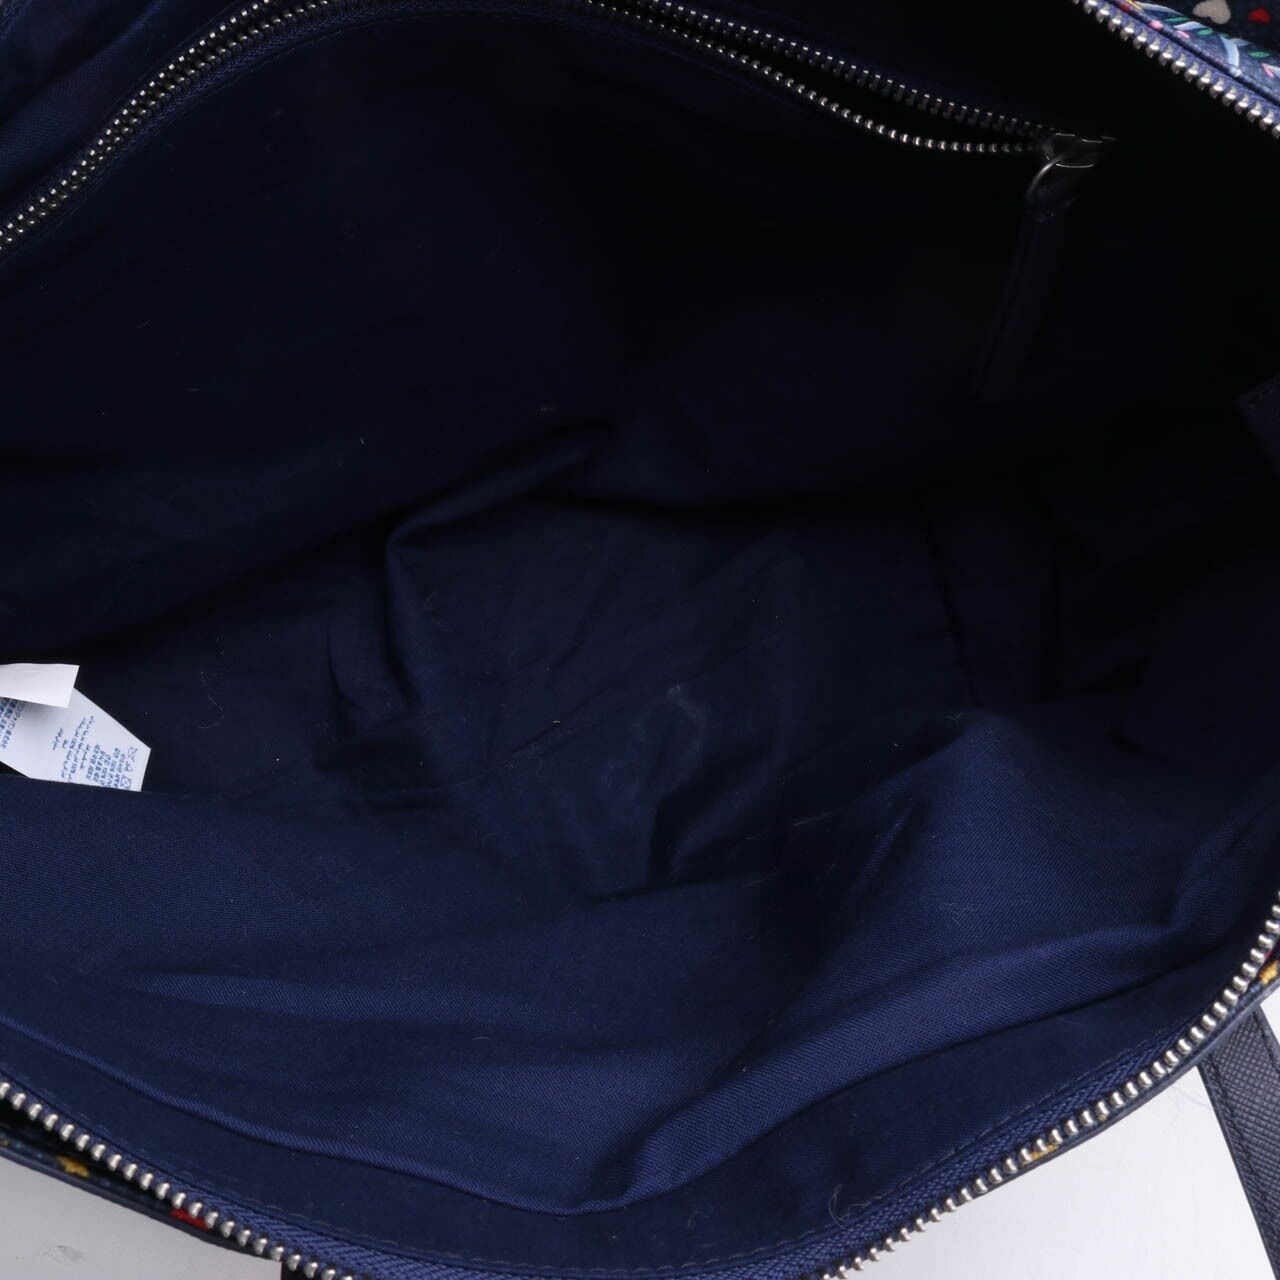 Cath Kidston Navy Patterned Love Tote Bag